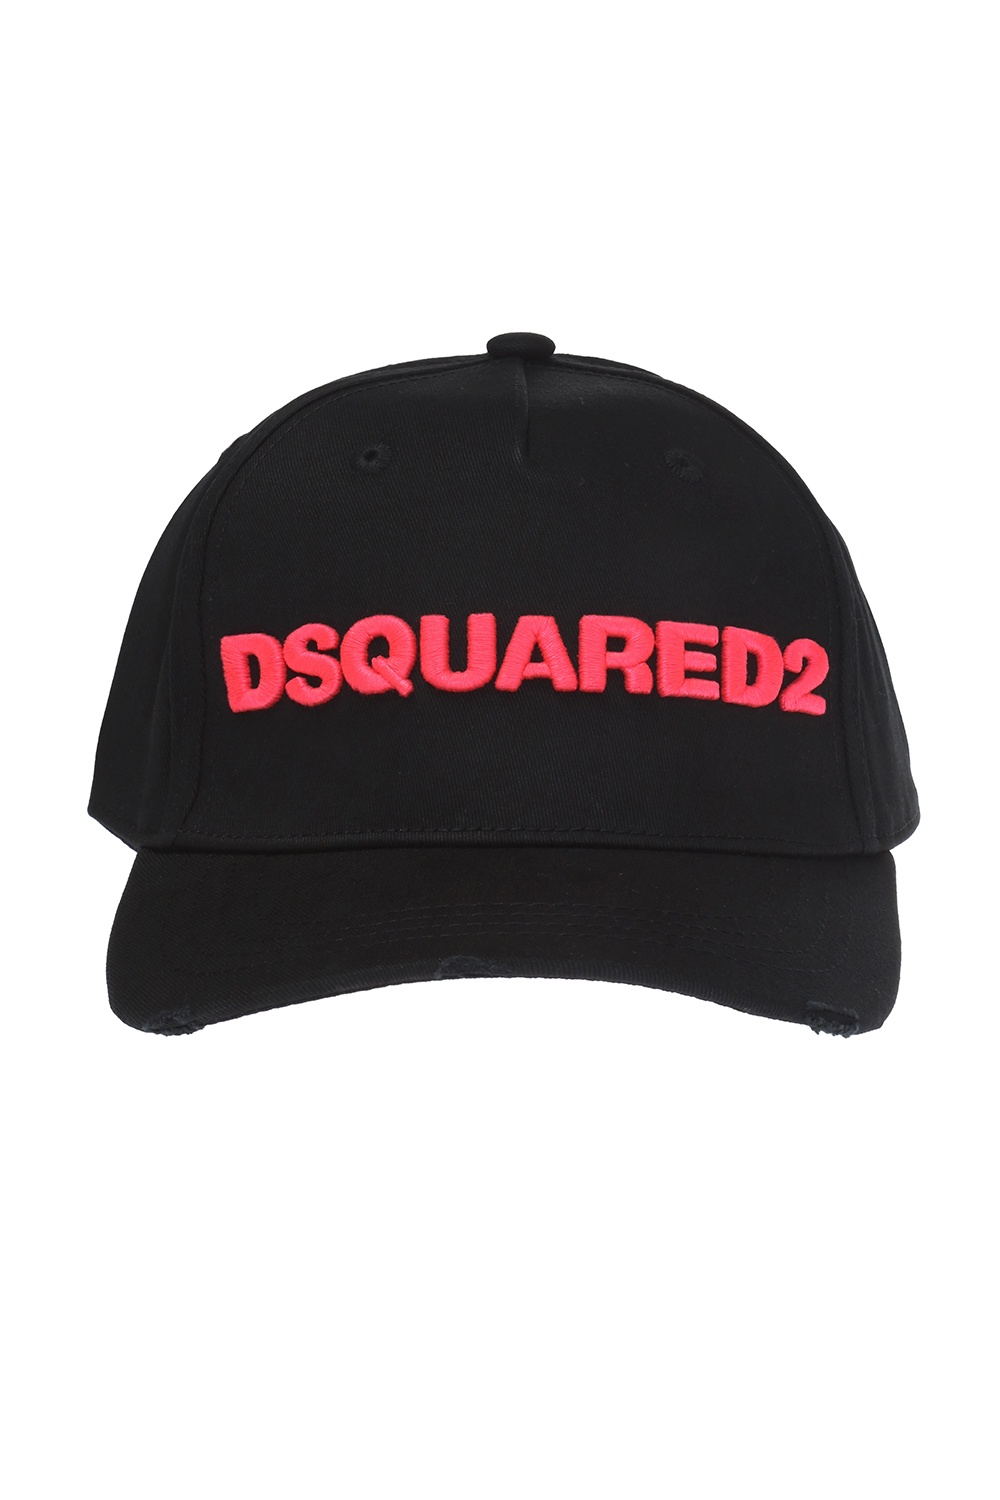 Dsquared2 hat xs black Trunks